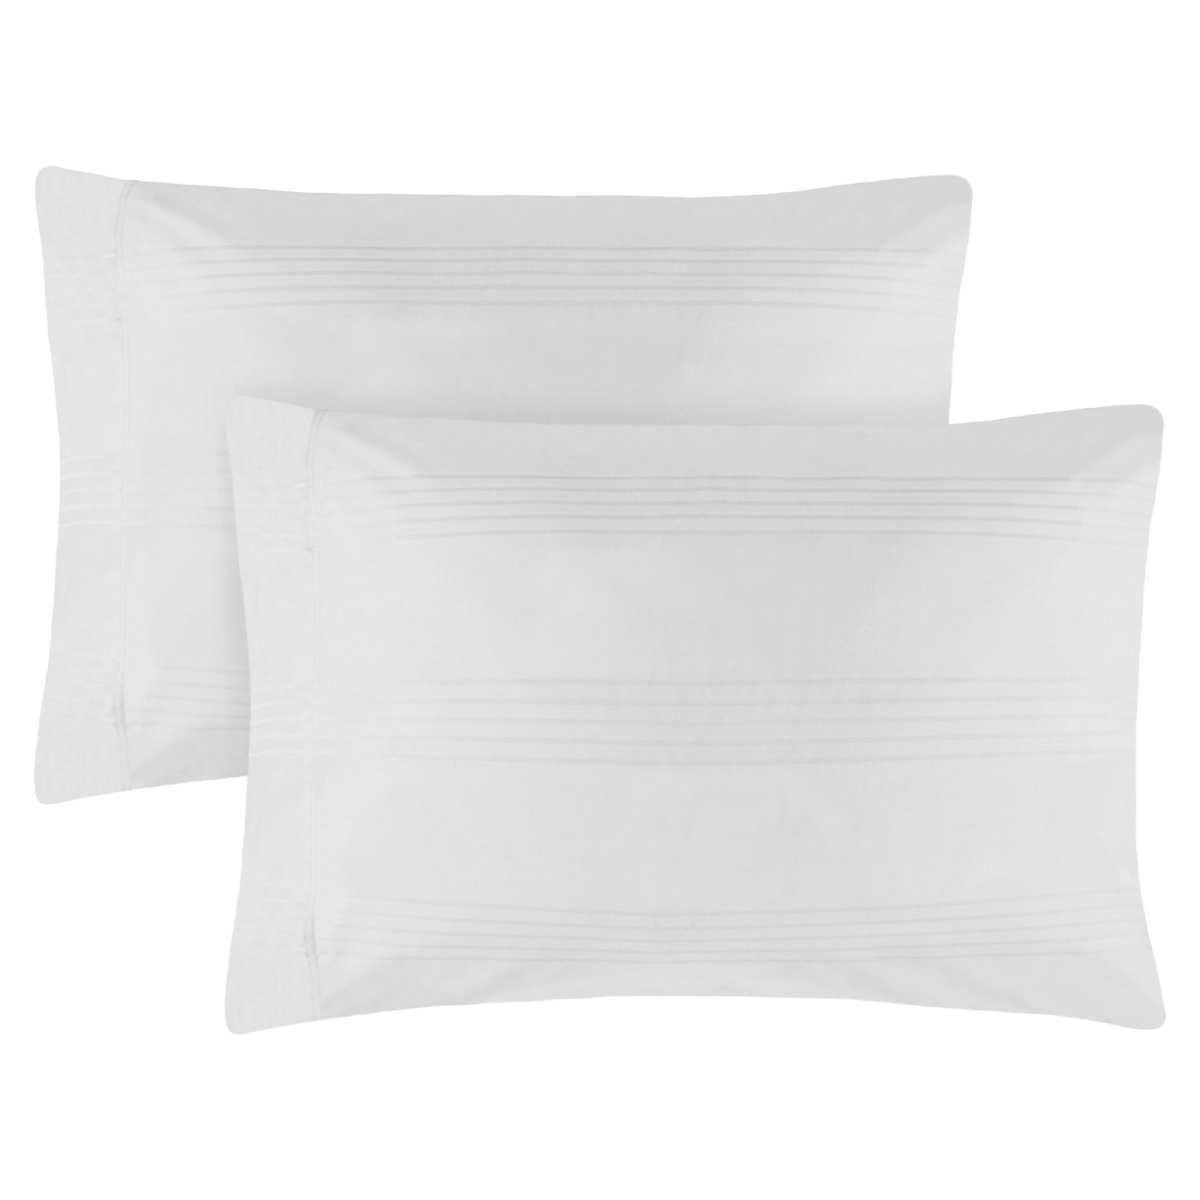 Yms008213 Premium 420 Thread Count 100 Percent Cotton Pillowcase Set, White - Standard - 2 Piece